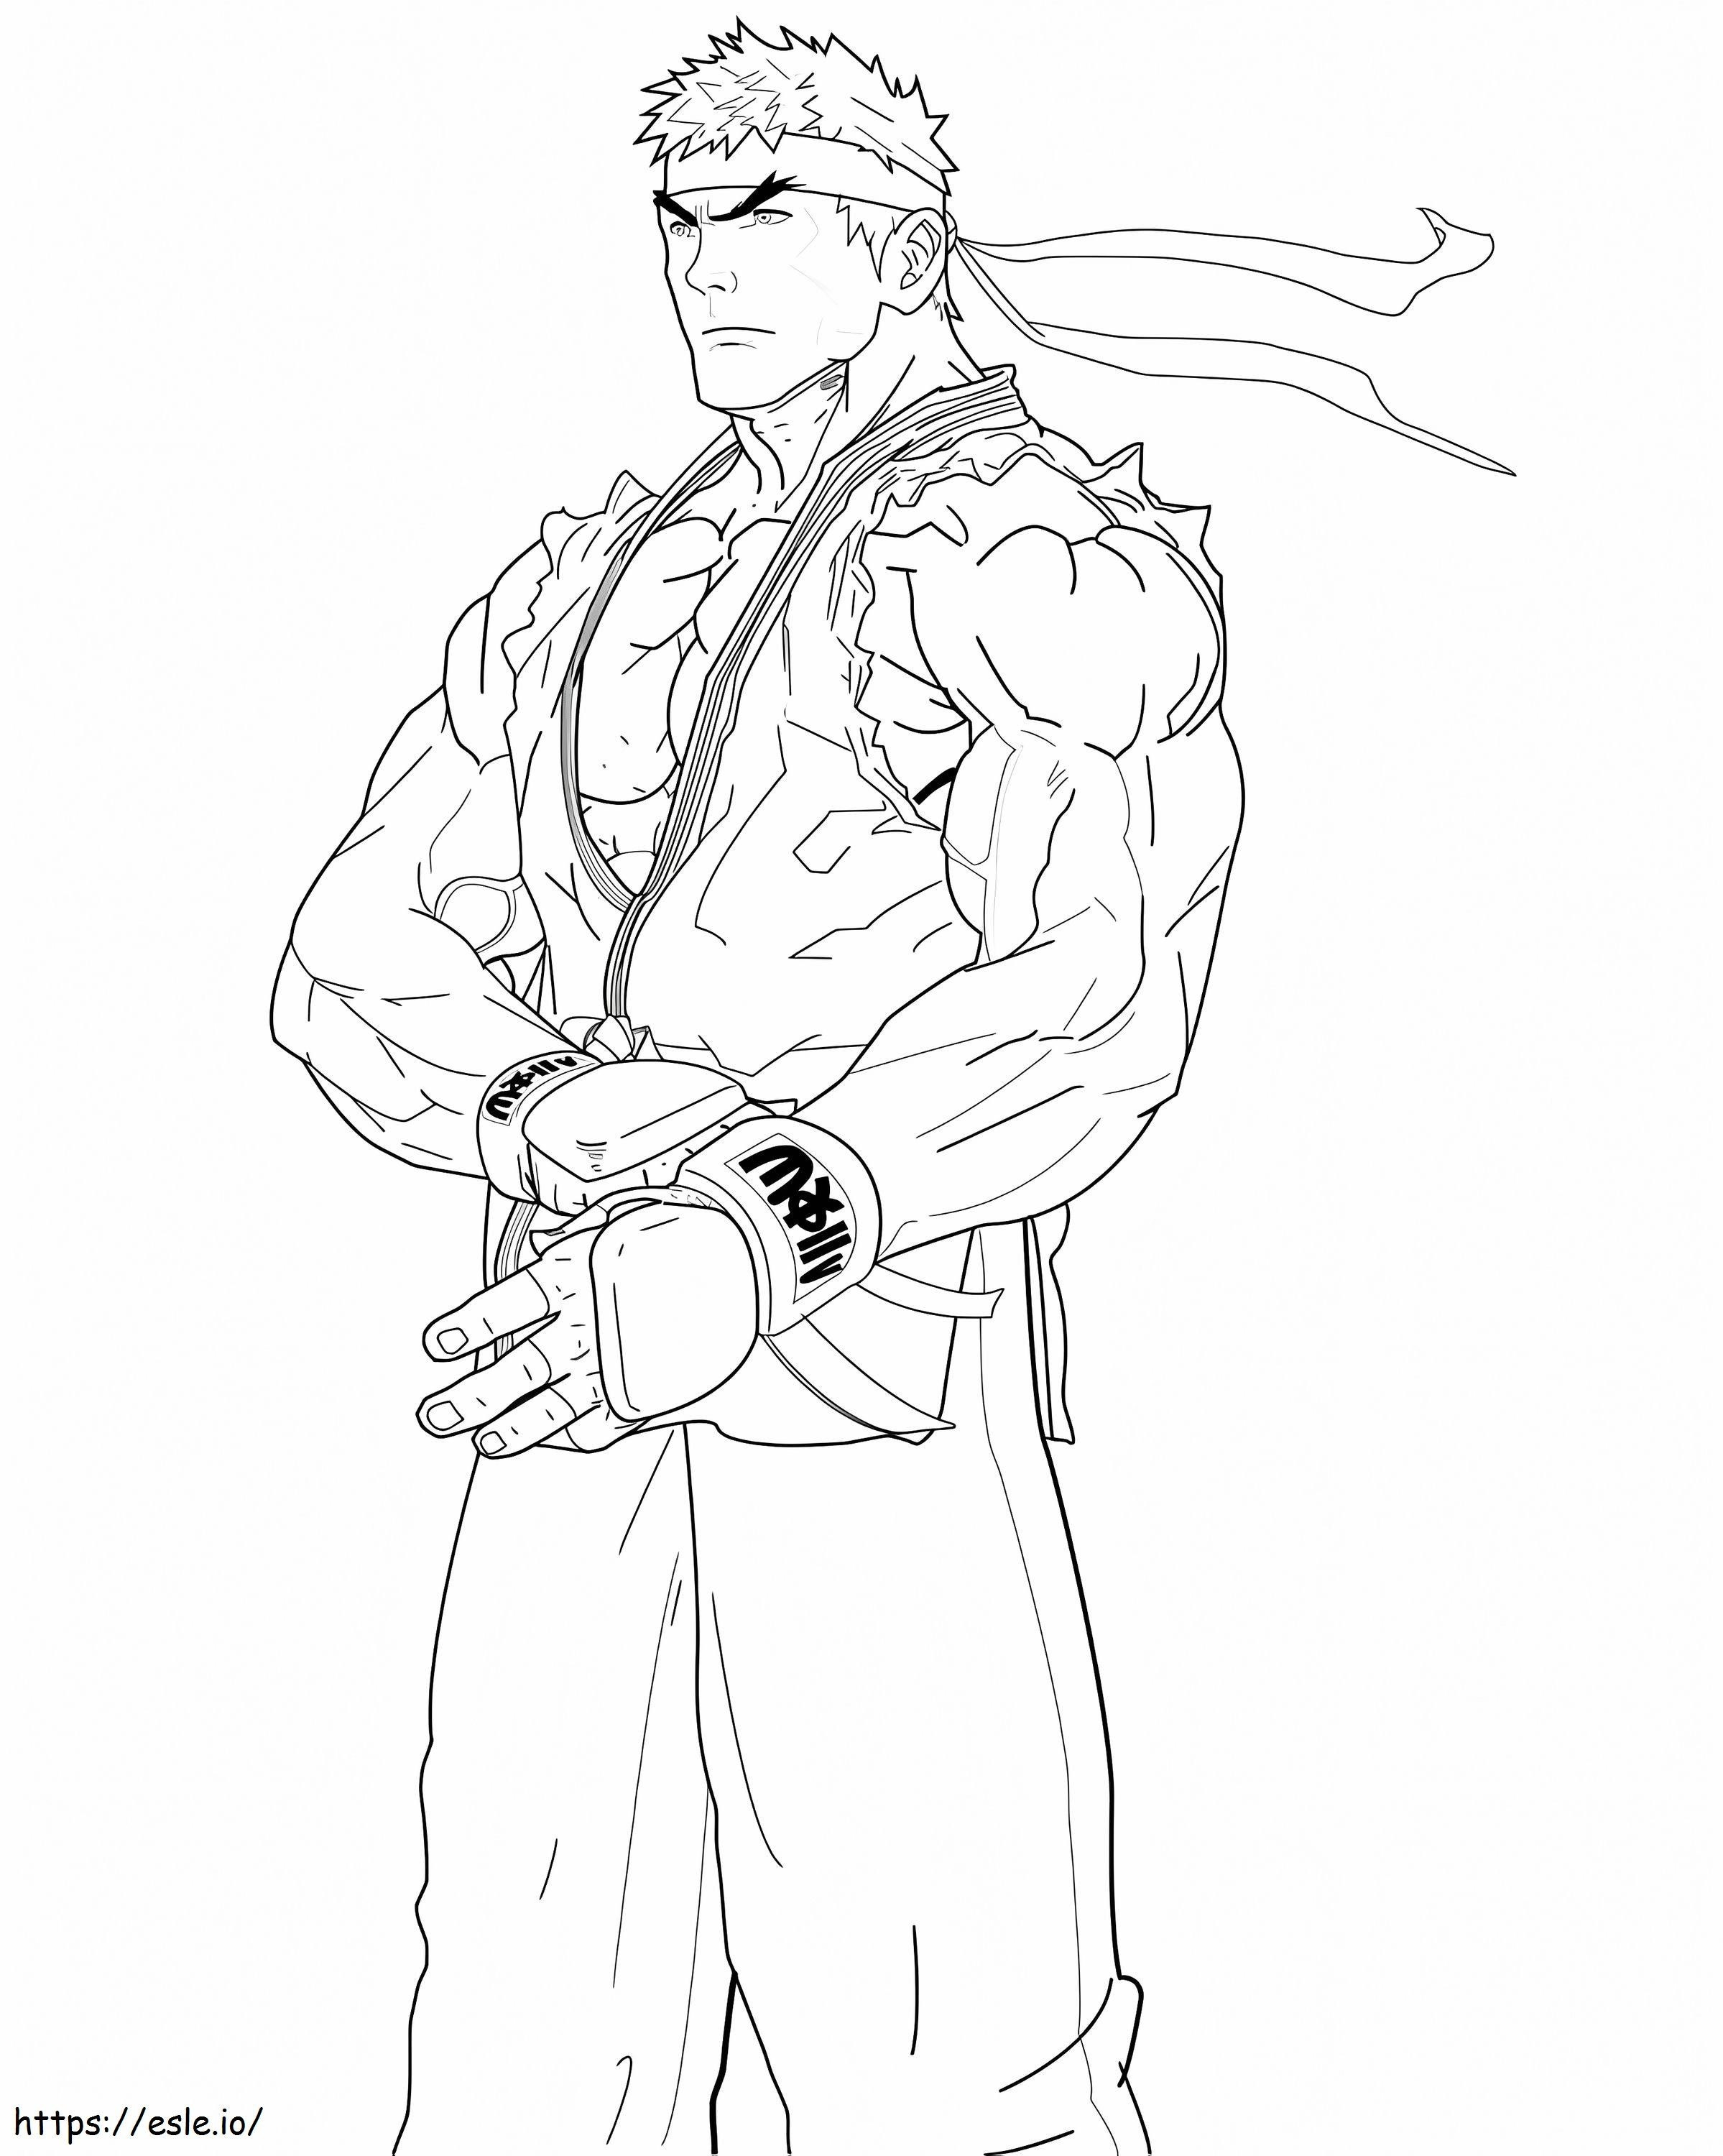 Cooler Ryu Street Fighter ausmalbilder